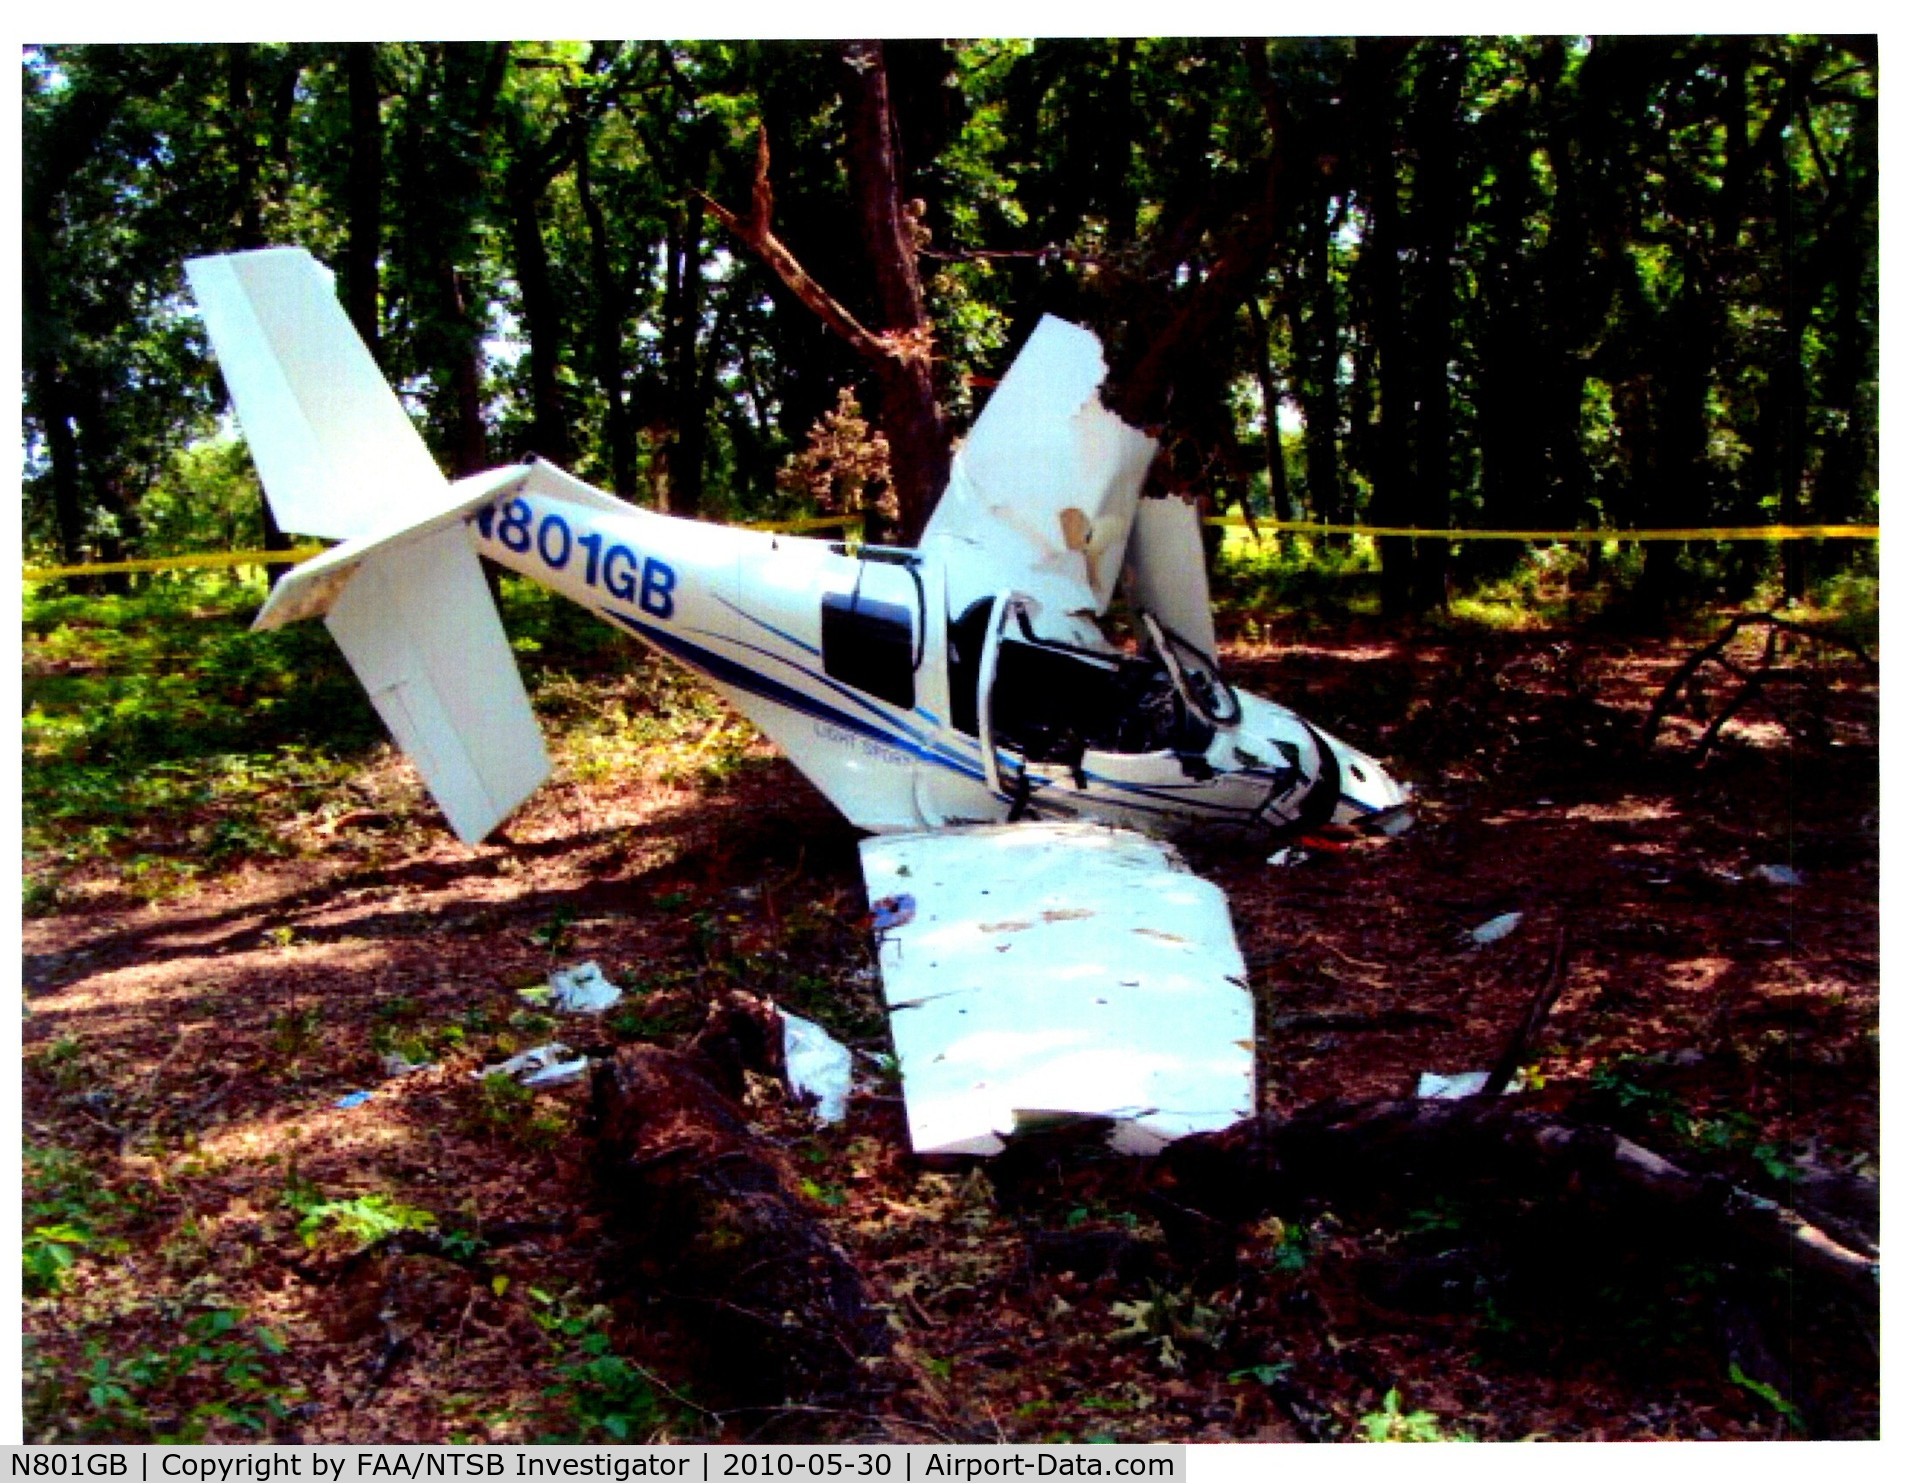 N801GB, 2007 Aveko VL-3 LSA C/N VL-3-012, Crash-scene photograph taken by the F.A.A.